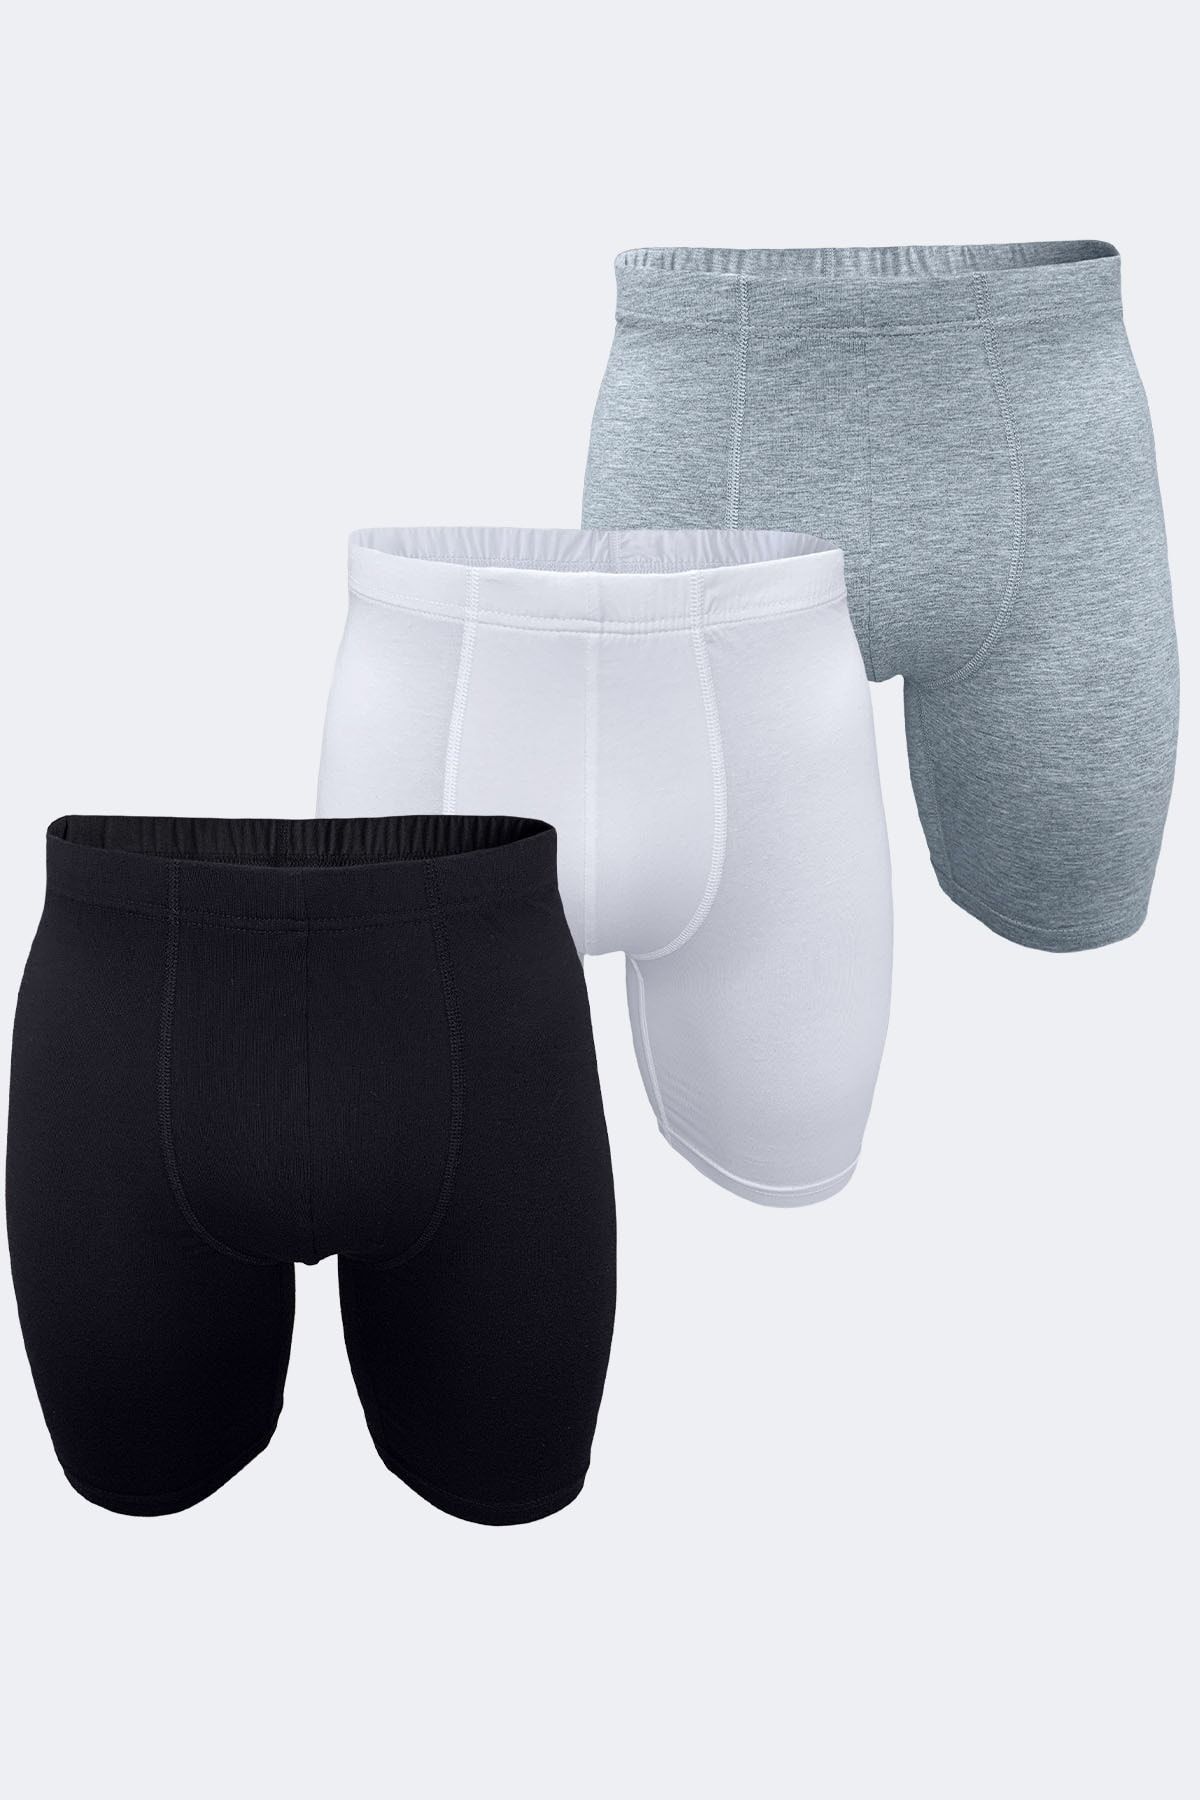 Malabadi Gray White Black 3 Pack Men's Long Leg Modal Boxers 3m018 -  Trendyol